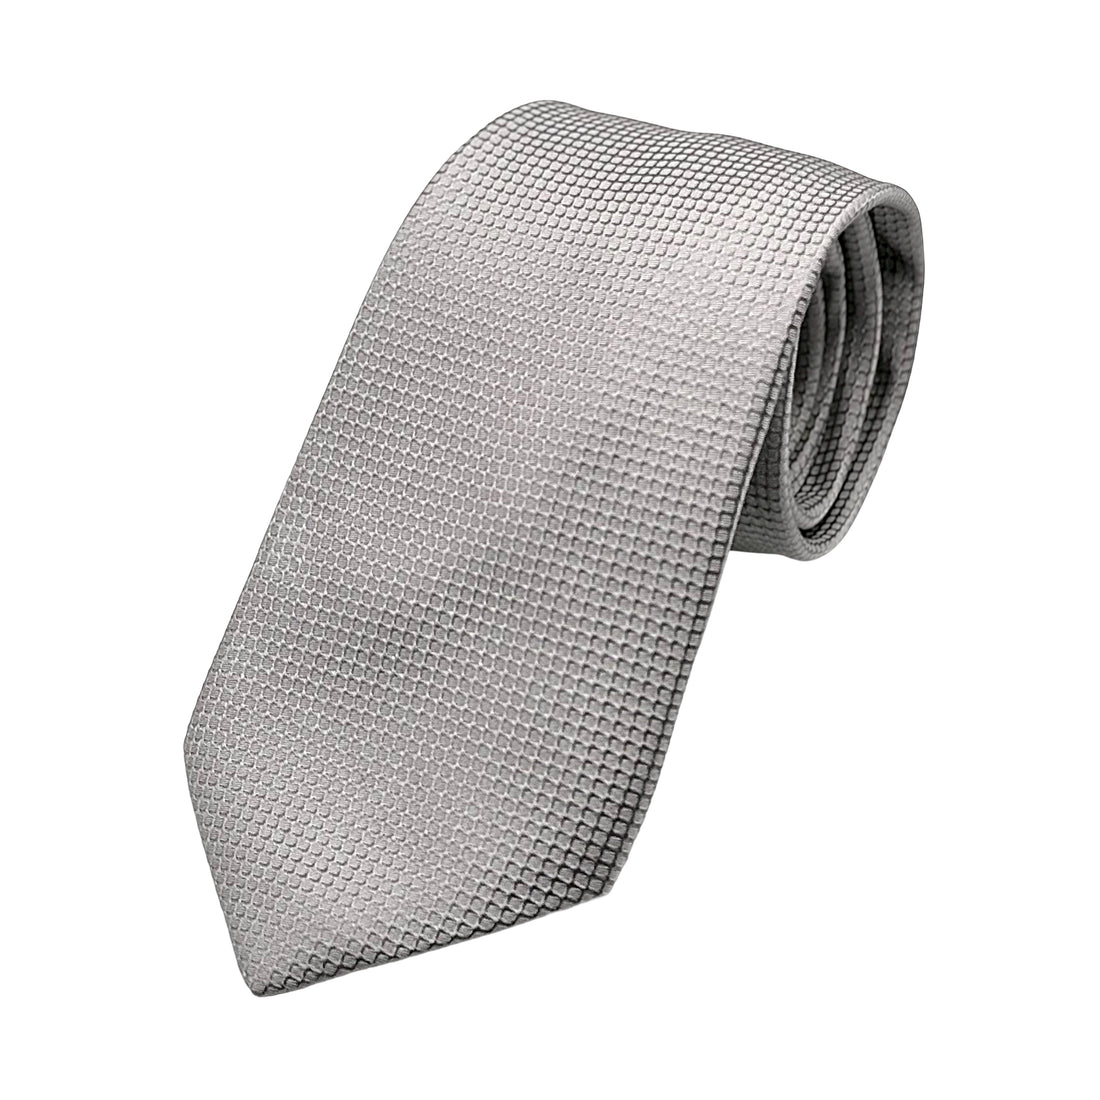 James Adelin Mens Luxury Silk Neck Tie in Subtle Textured Weave Design